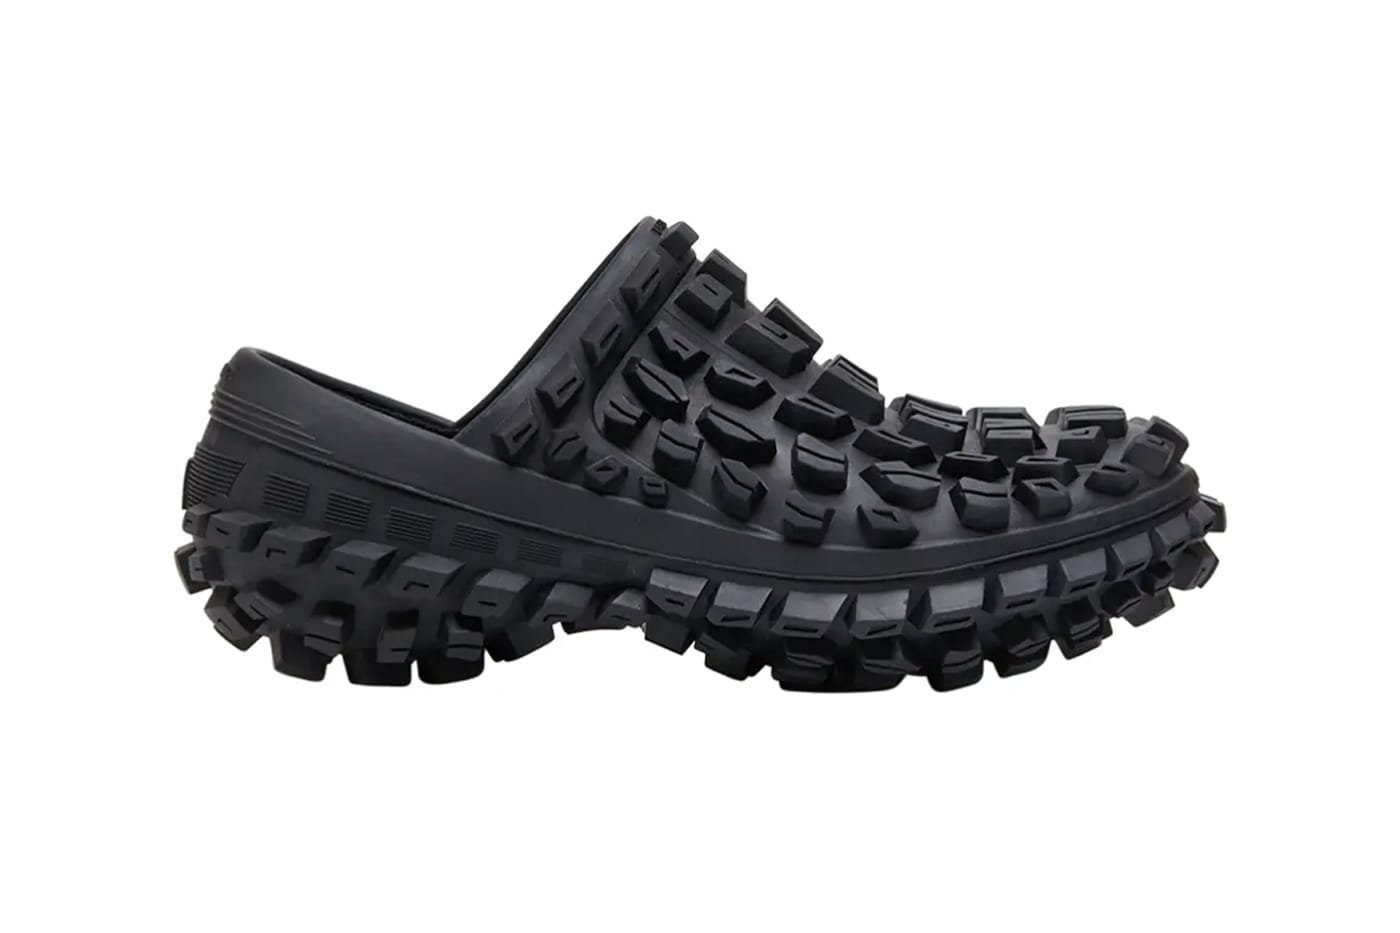 Balenciaga Defender Extreme Tire Tread Clogs Release | Hypebeast